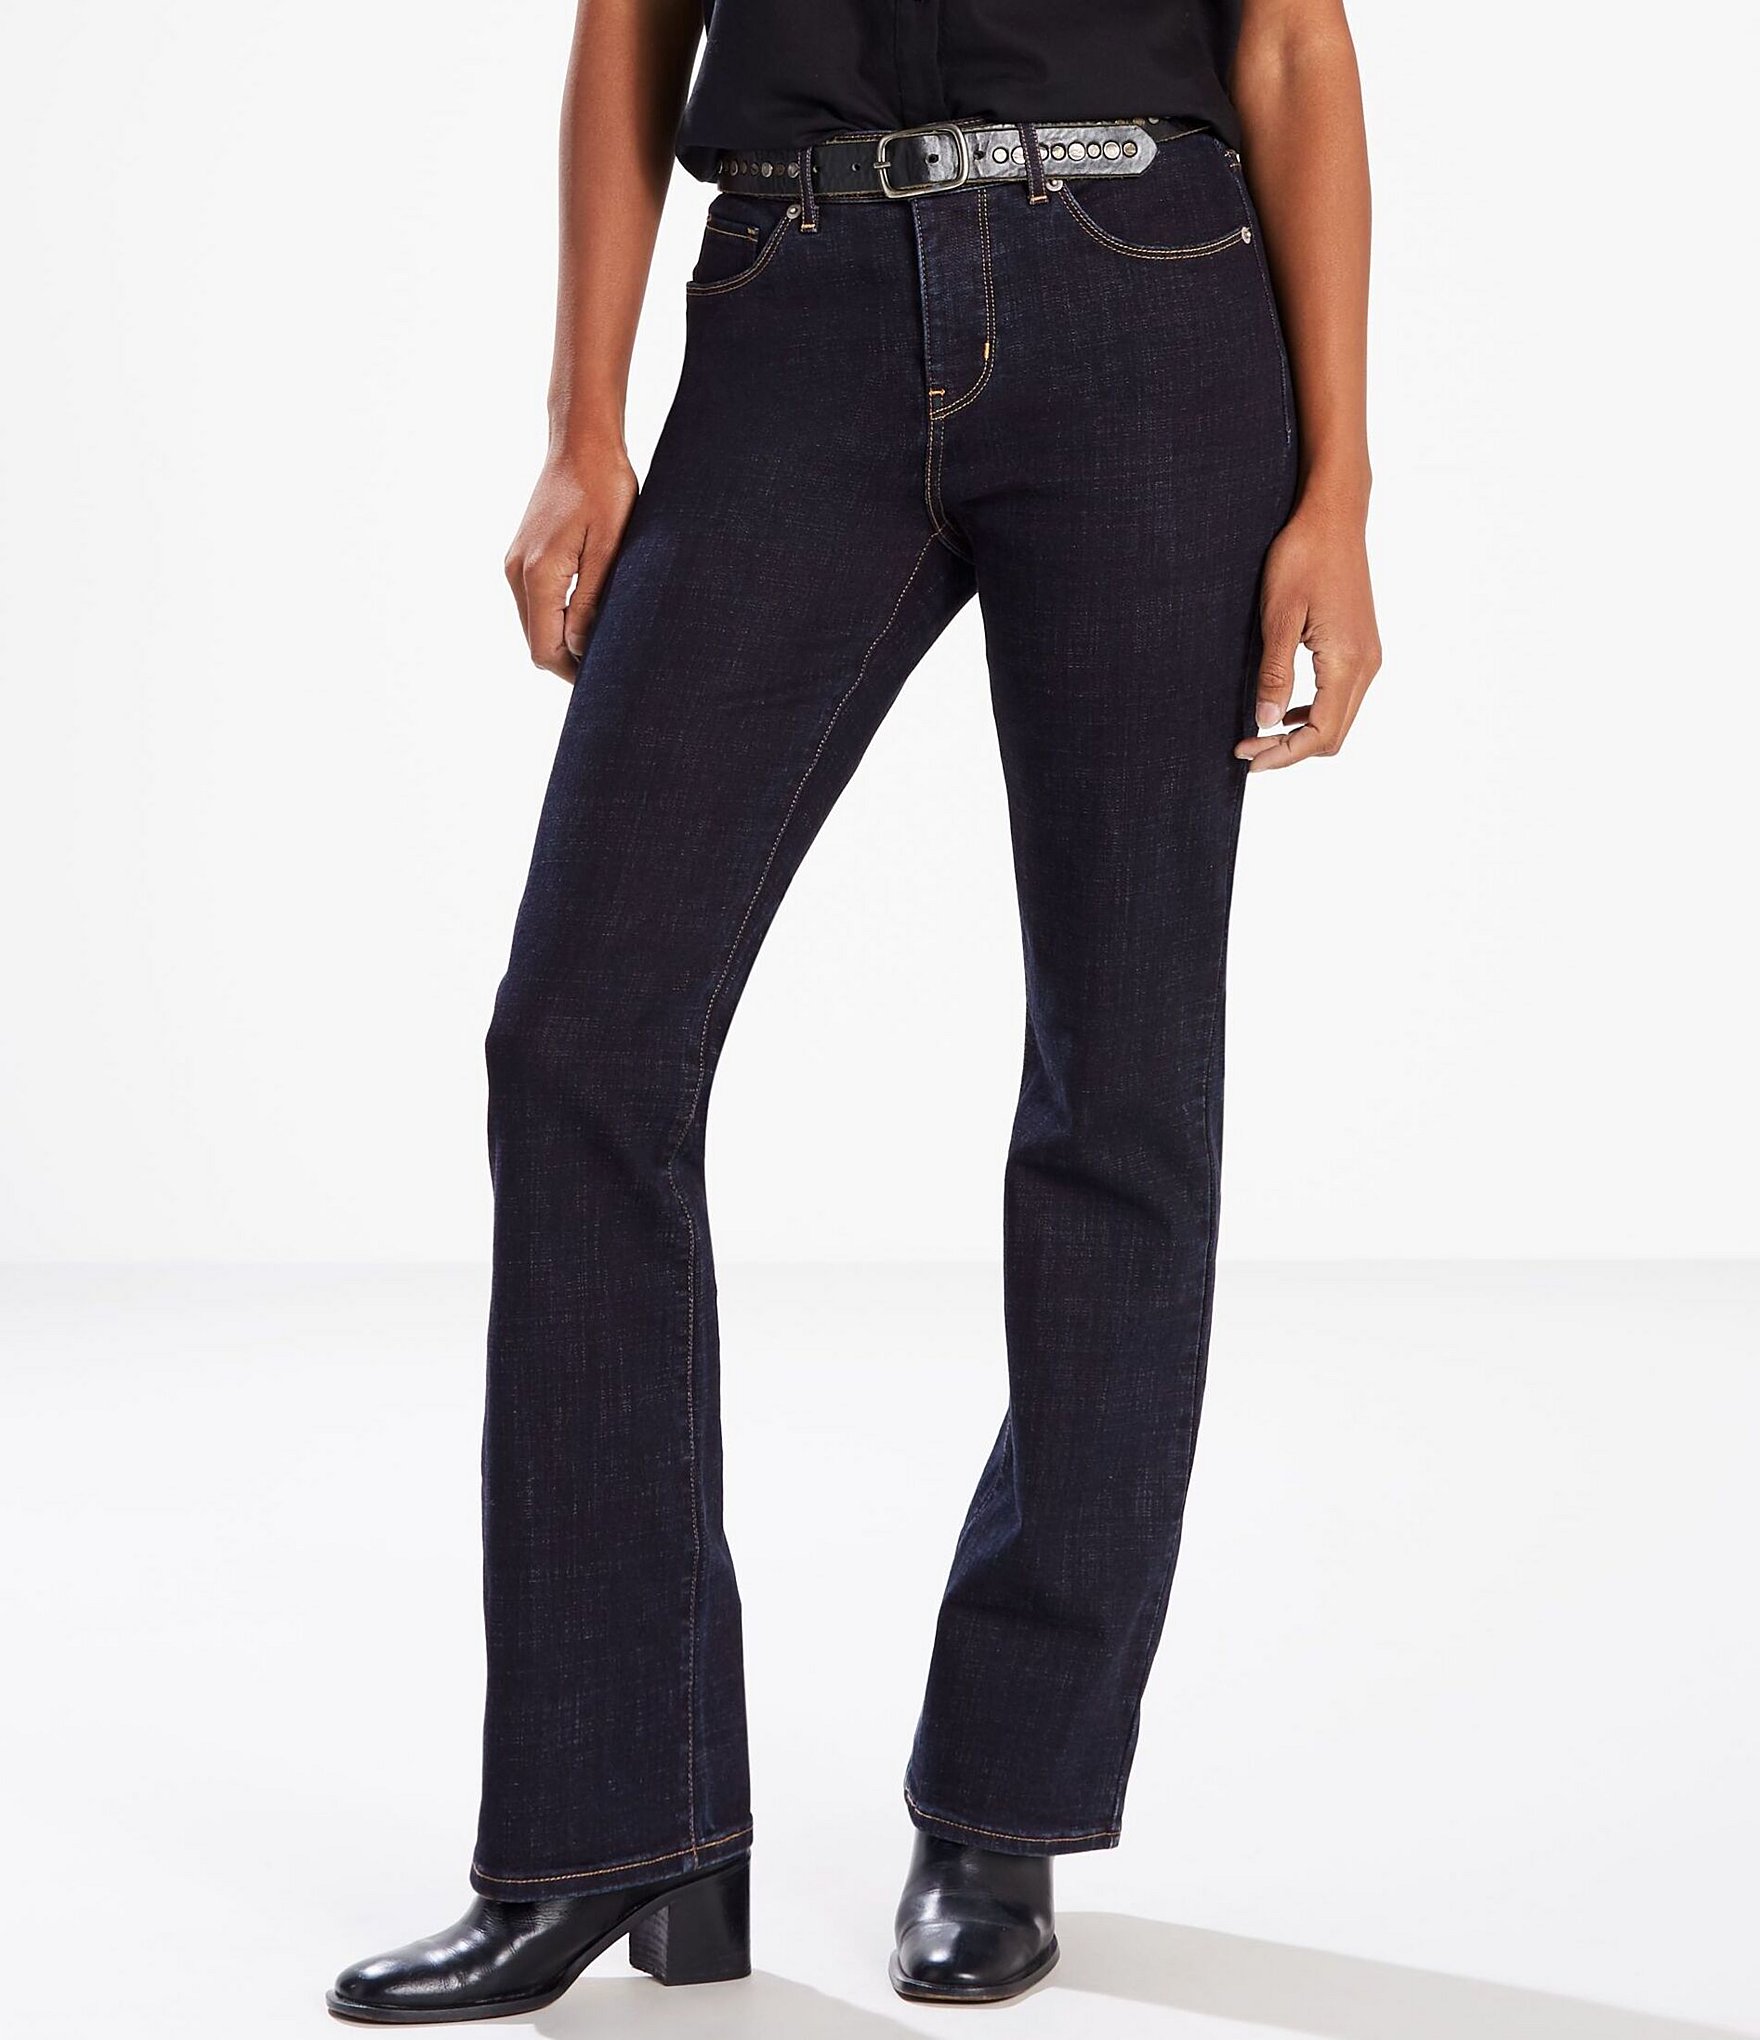 Levi's® Classic Bootcut Leg Mid Rise Jeans | Dillard's